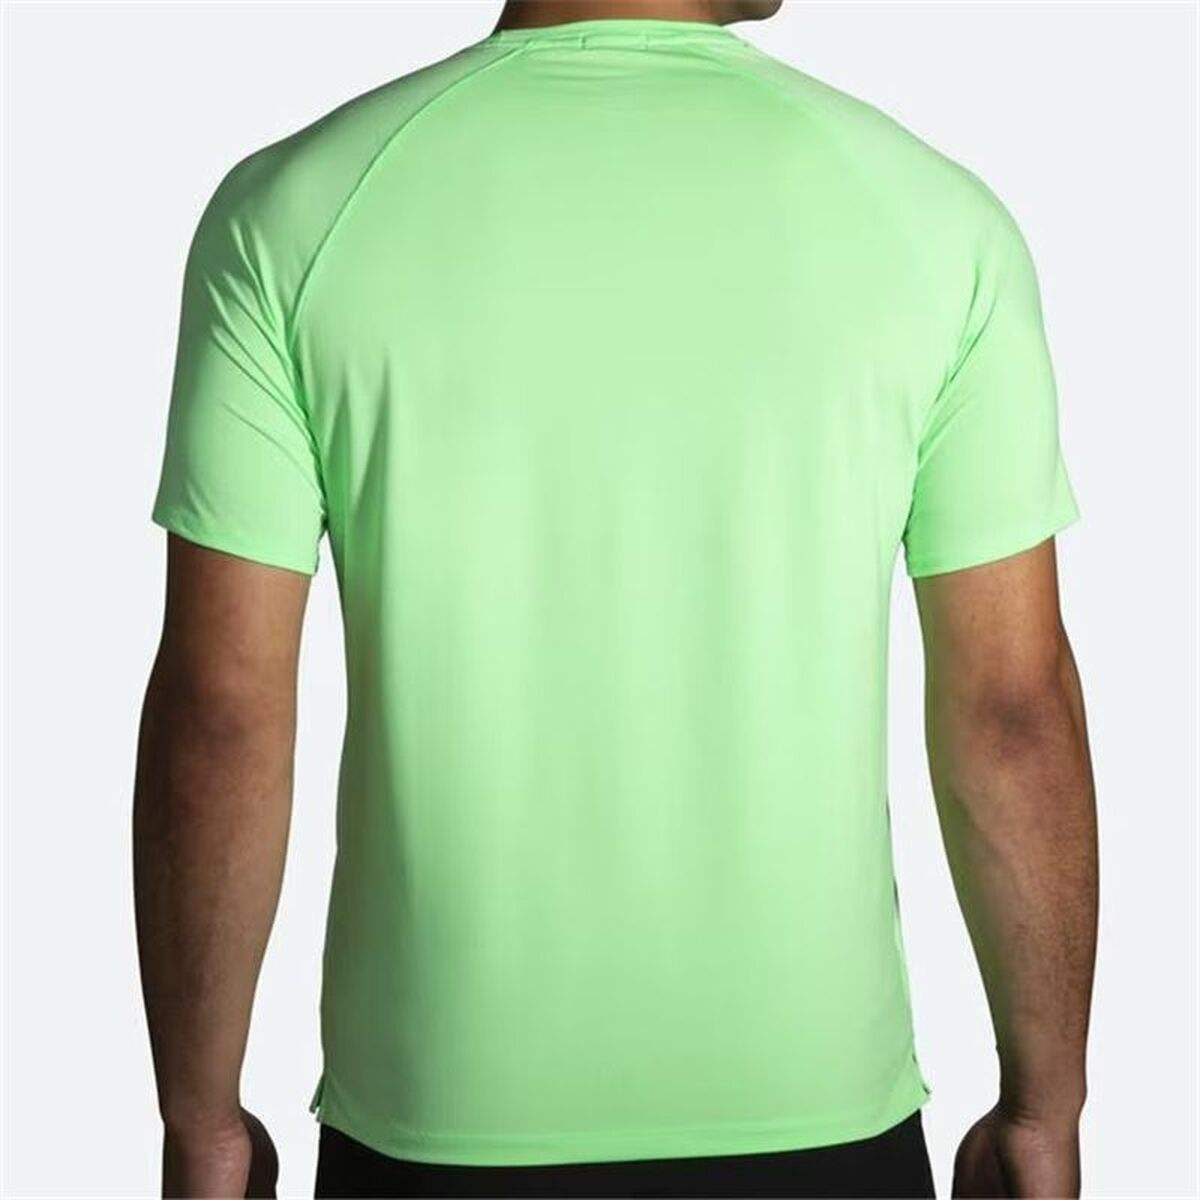 T-shirt à manches courtes homme Brooks Atmosphere 2.0 Vert citron - Brooks - Jardin D'Eyden - jardindeyden.fr